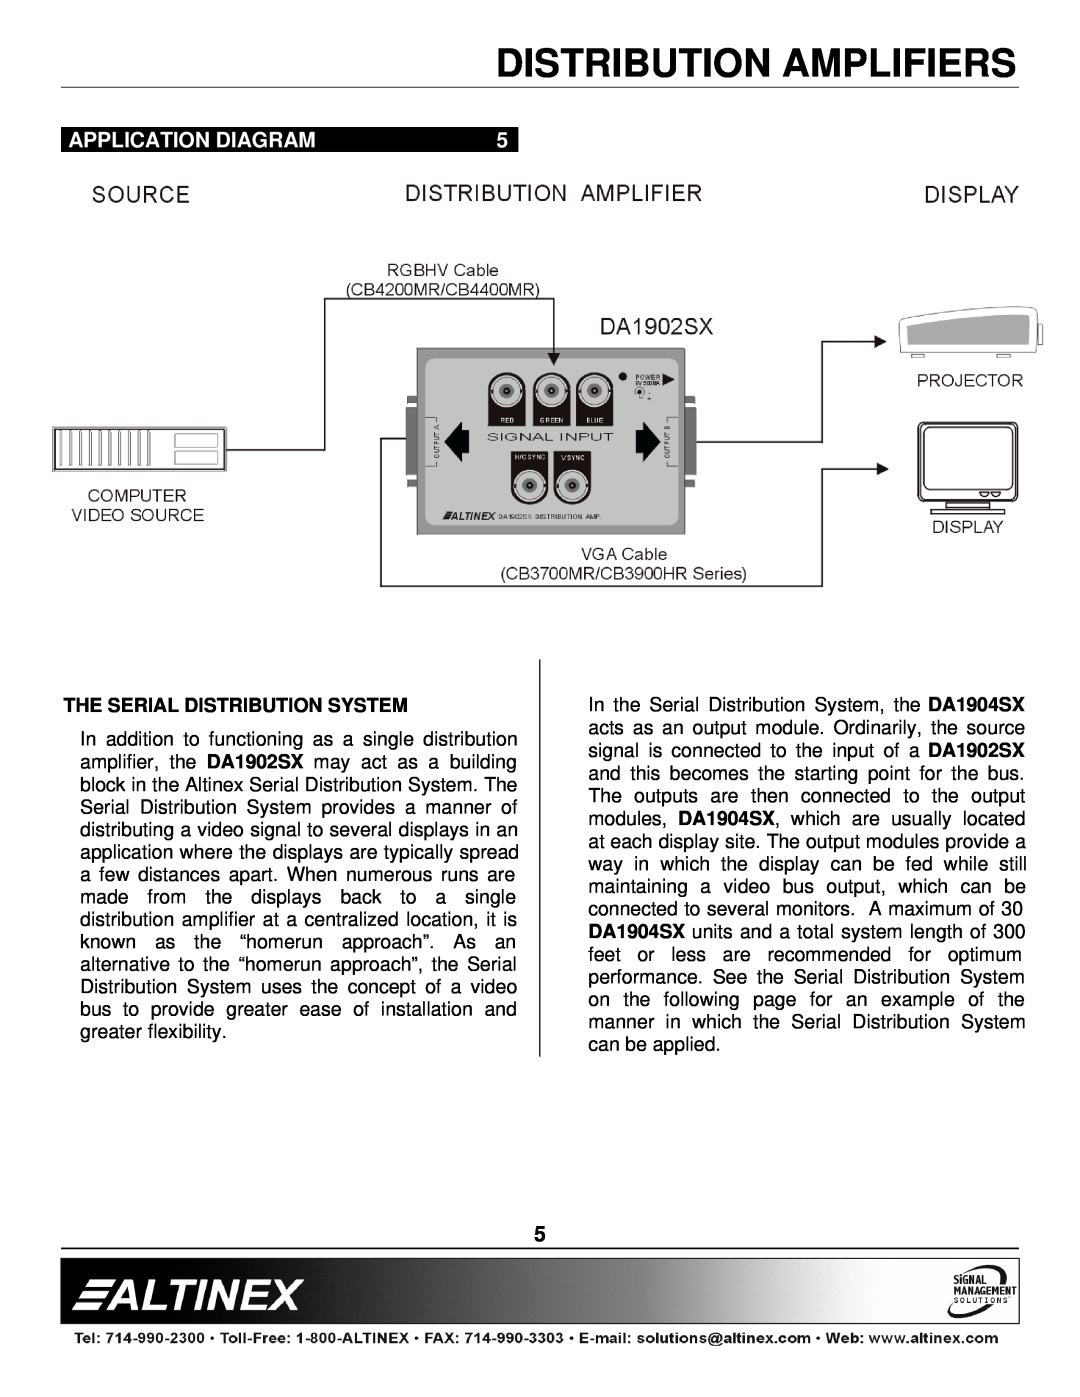 Altinex DA1902SX manual Application Diagram, The Serial Distribution System, Distribution Amplifiers 